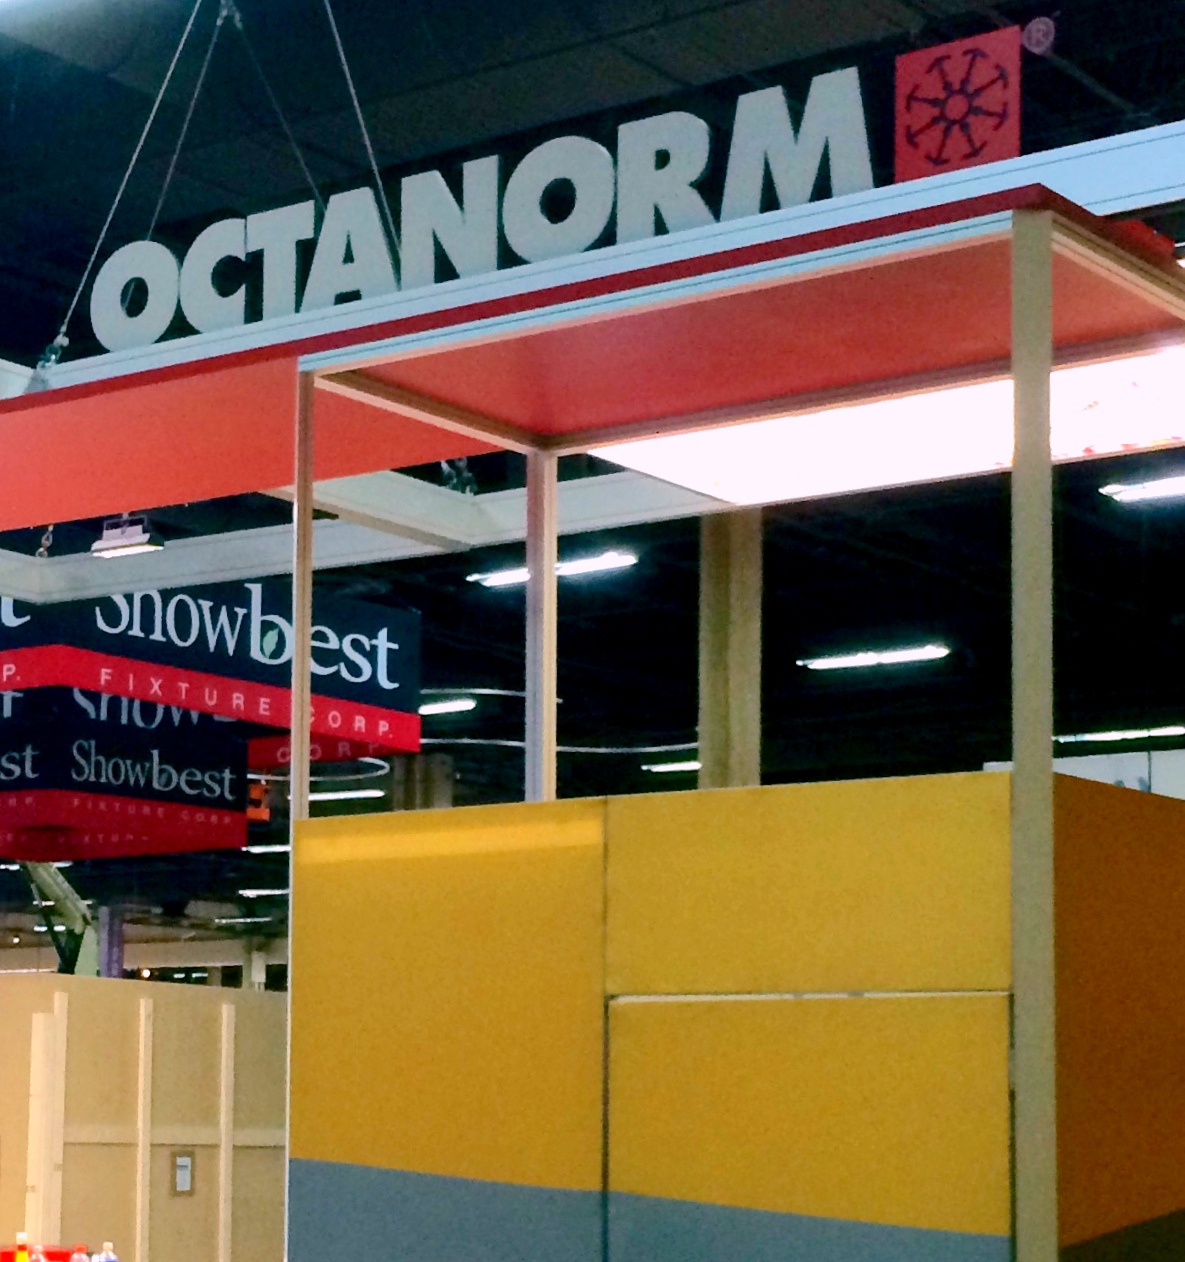 Octanorm Logo photo - 1